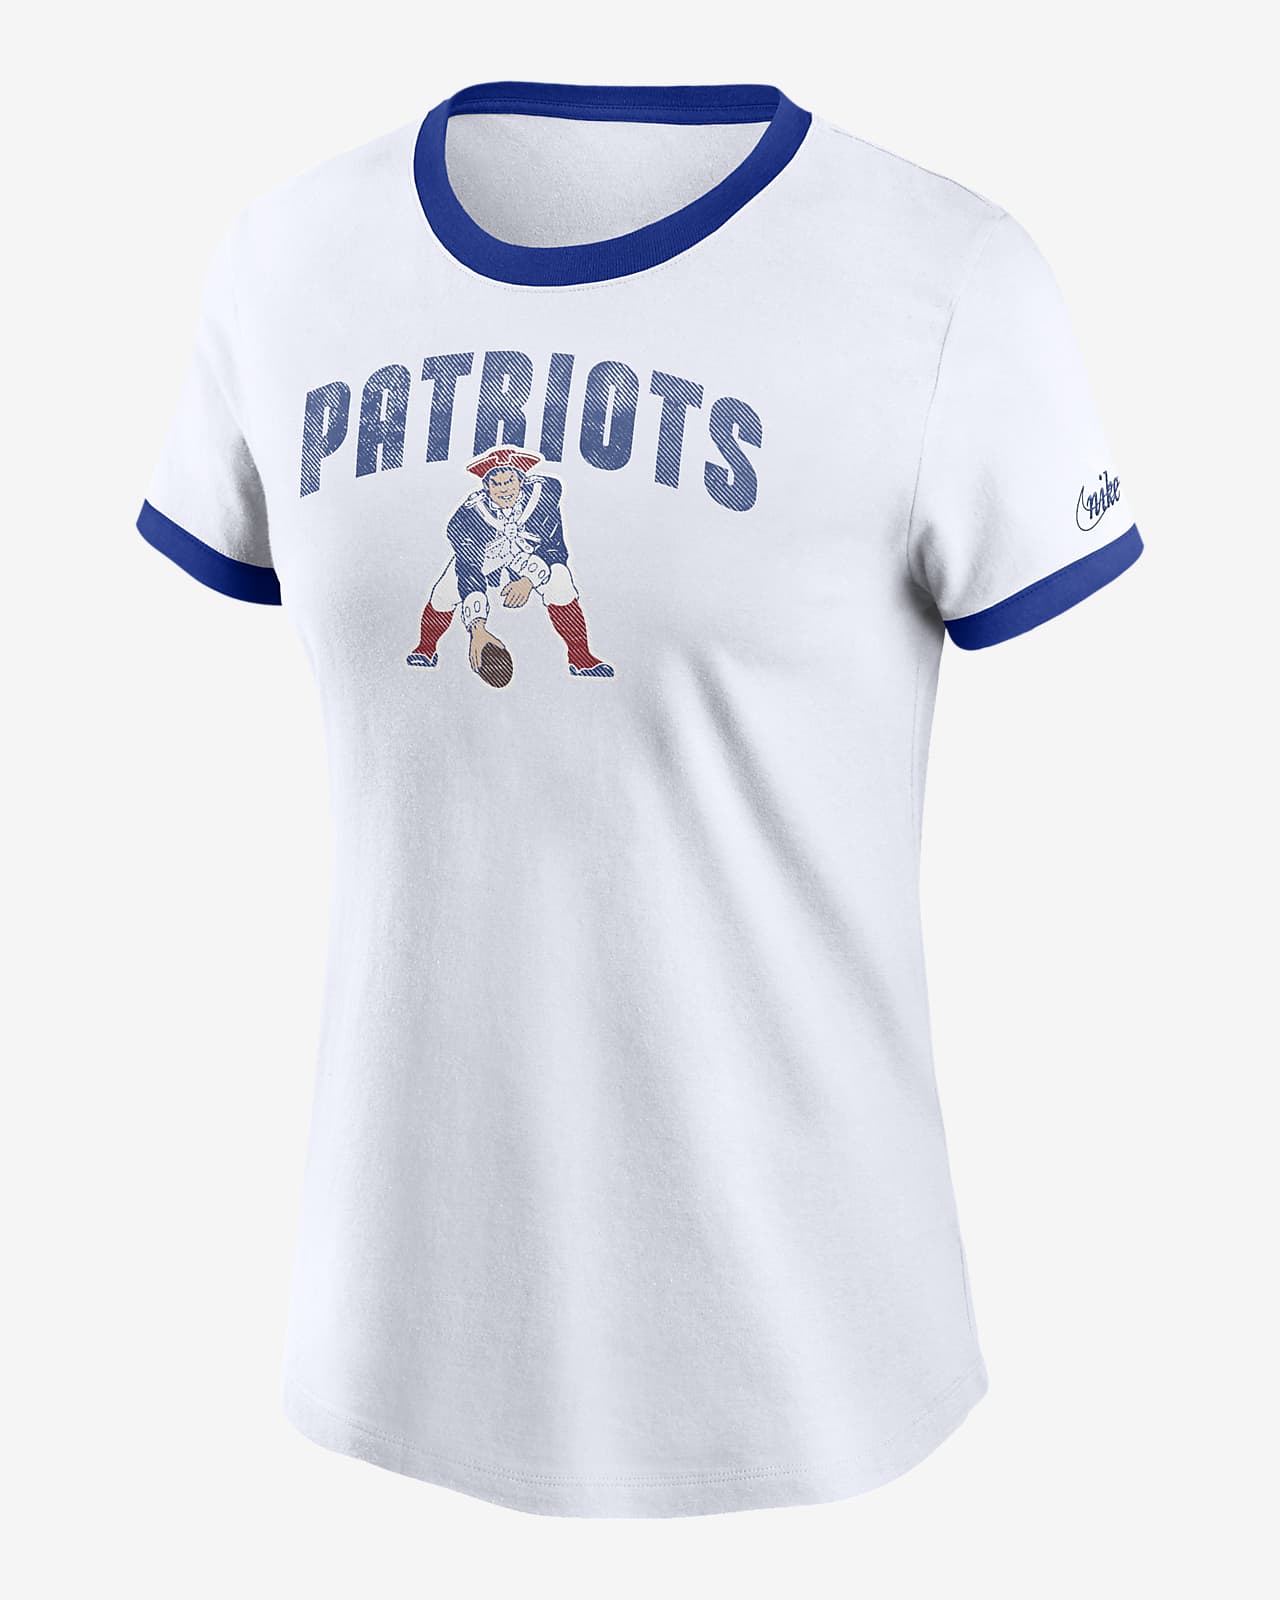 Nike Rewind (NFL New England Patriots) Women's Ringer T-Shirt.